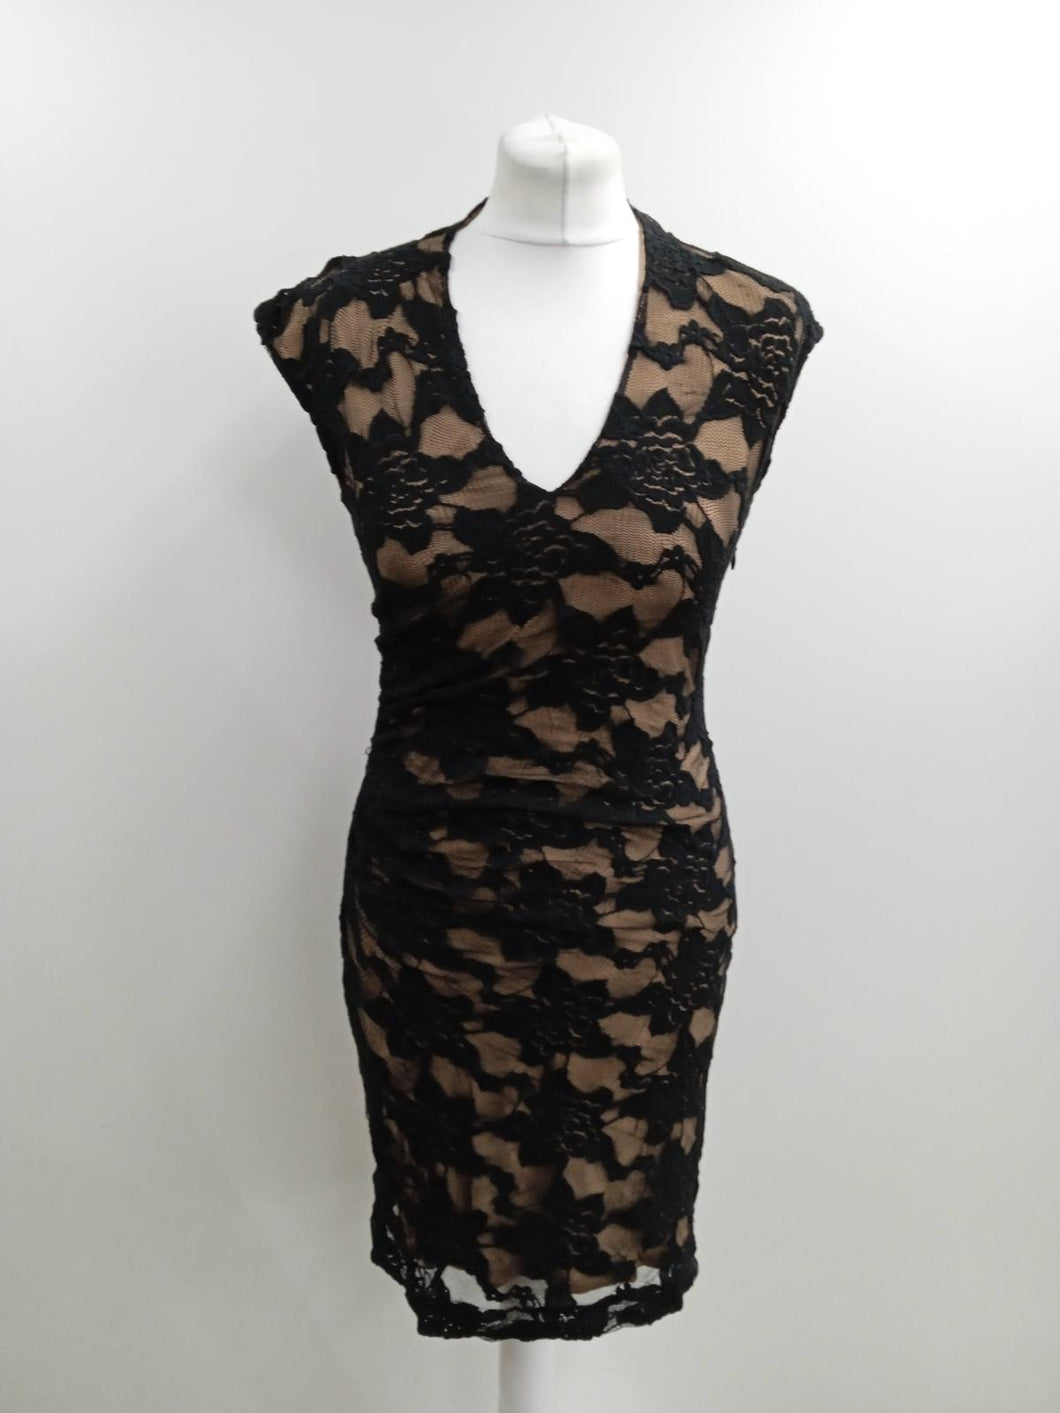 REBECCA TAYLOR Ladies Black Cotton Blend Lace Bodycon Dress Size 2 UK4 NEW